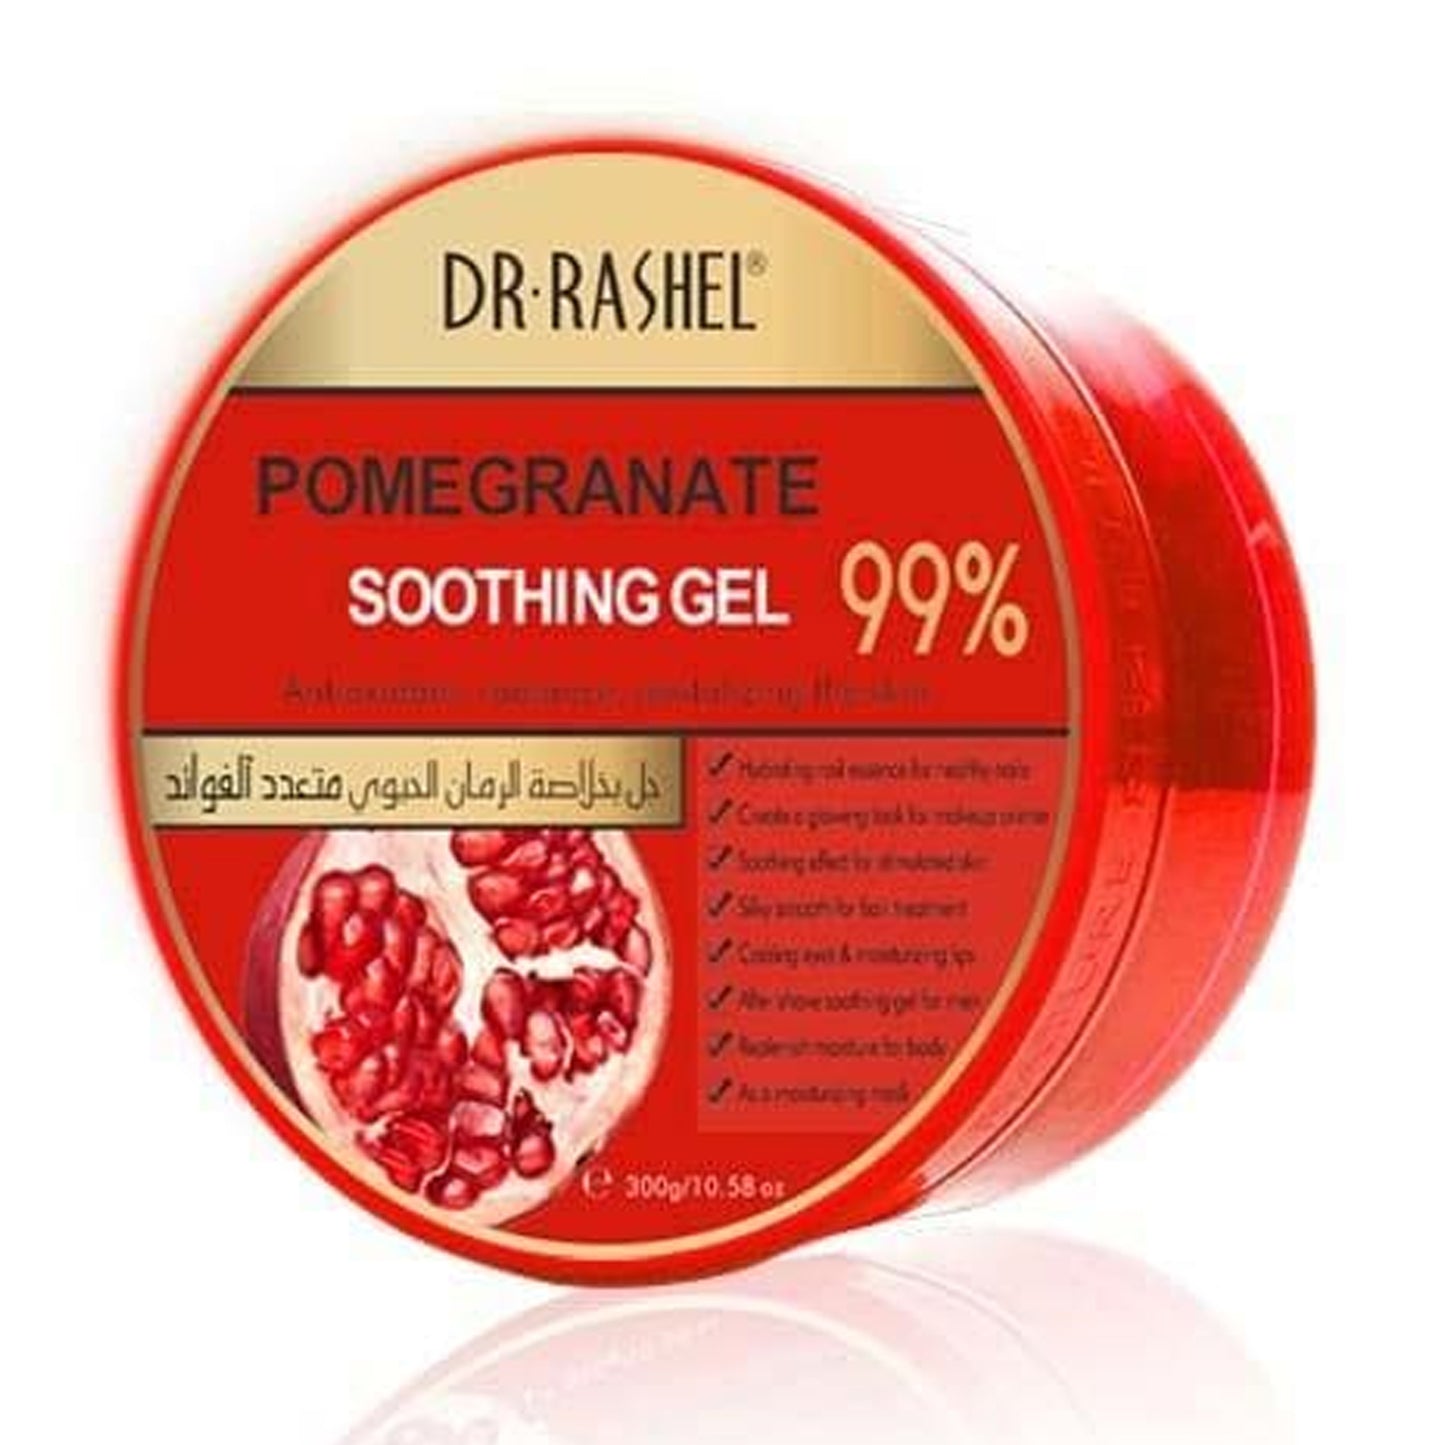 DR. RASHEL - POMEGRANATE SOOTHING GEL - 300ML